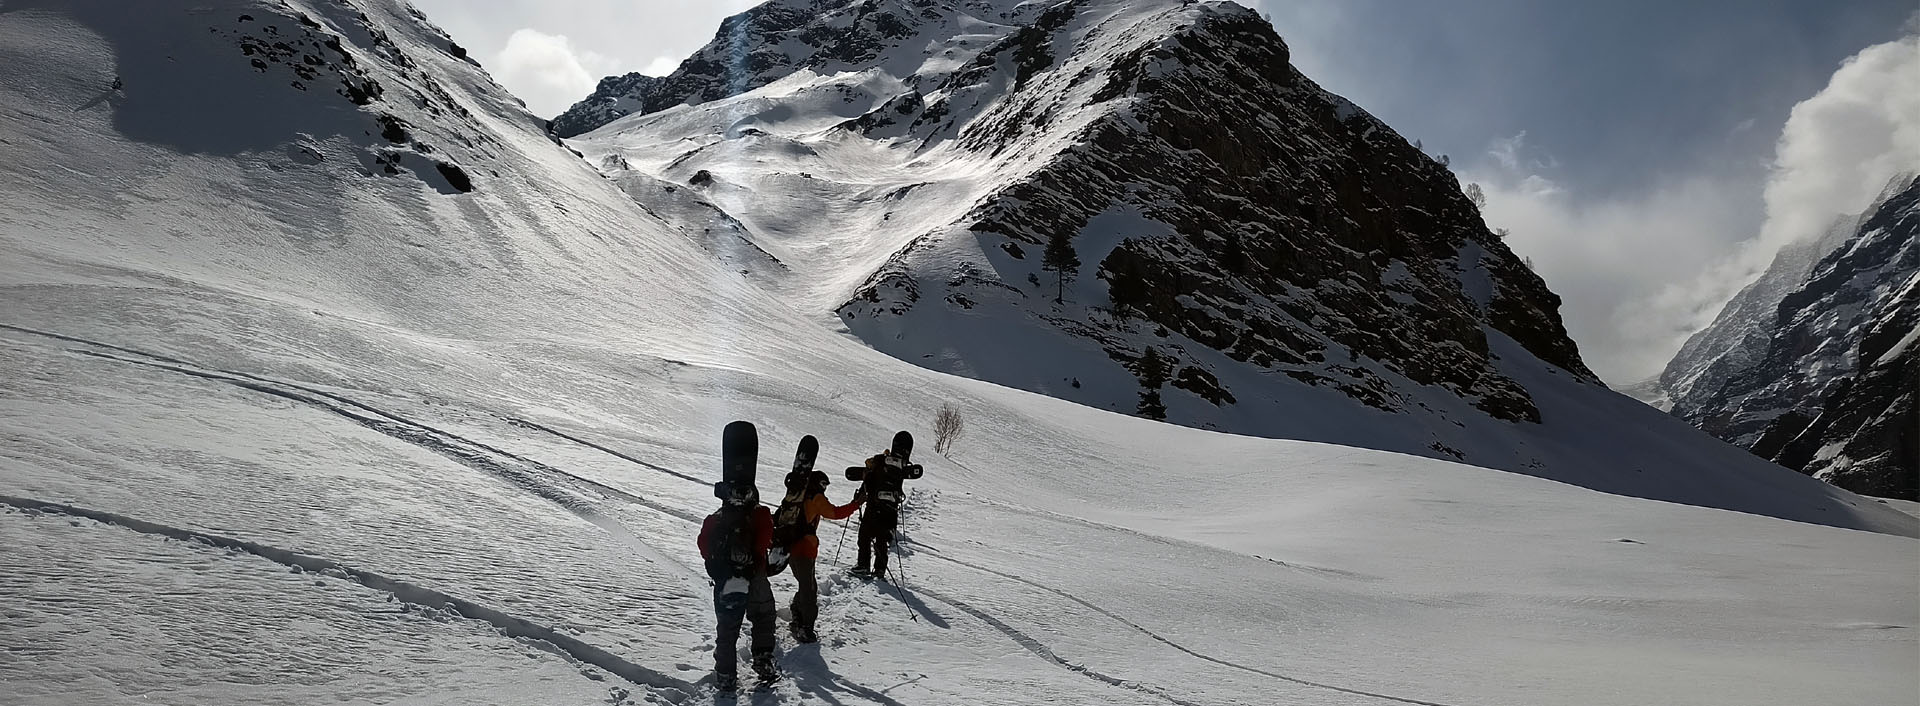 Ski mountaineers with snowboards on their backs walk towards a peak.